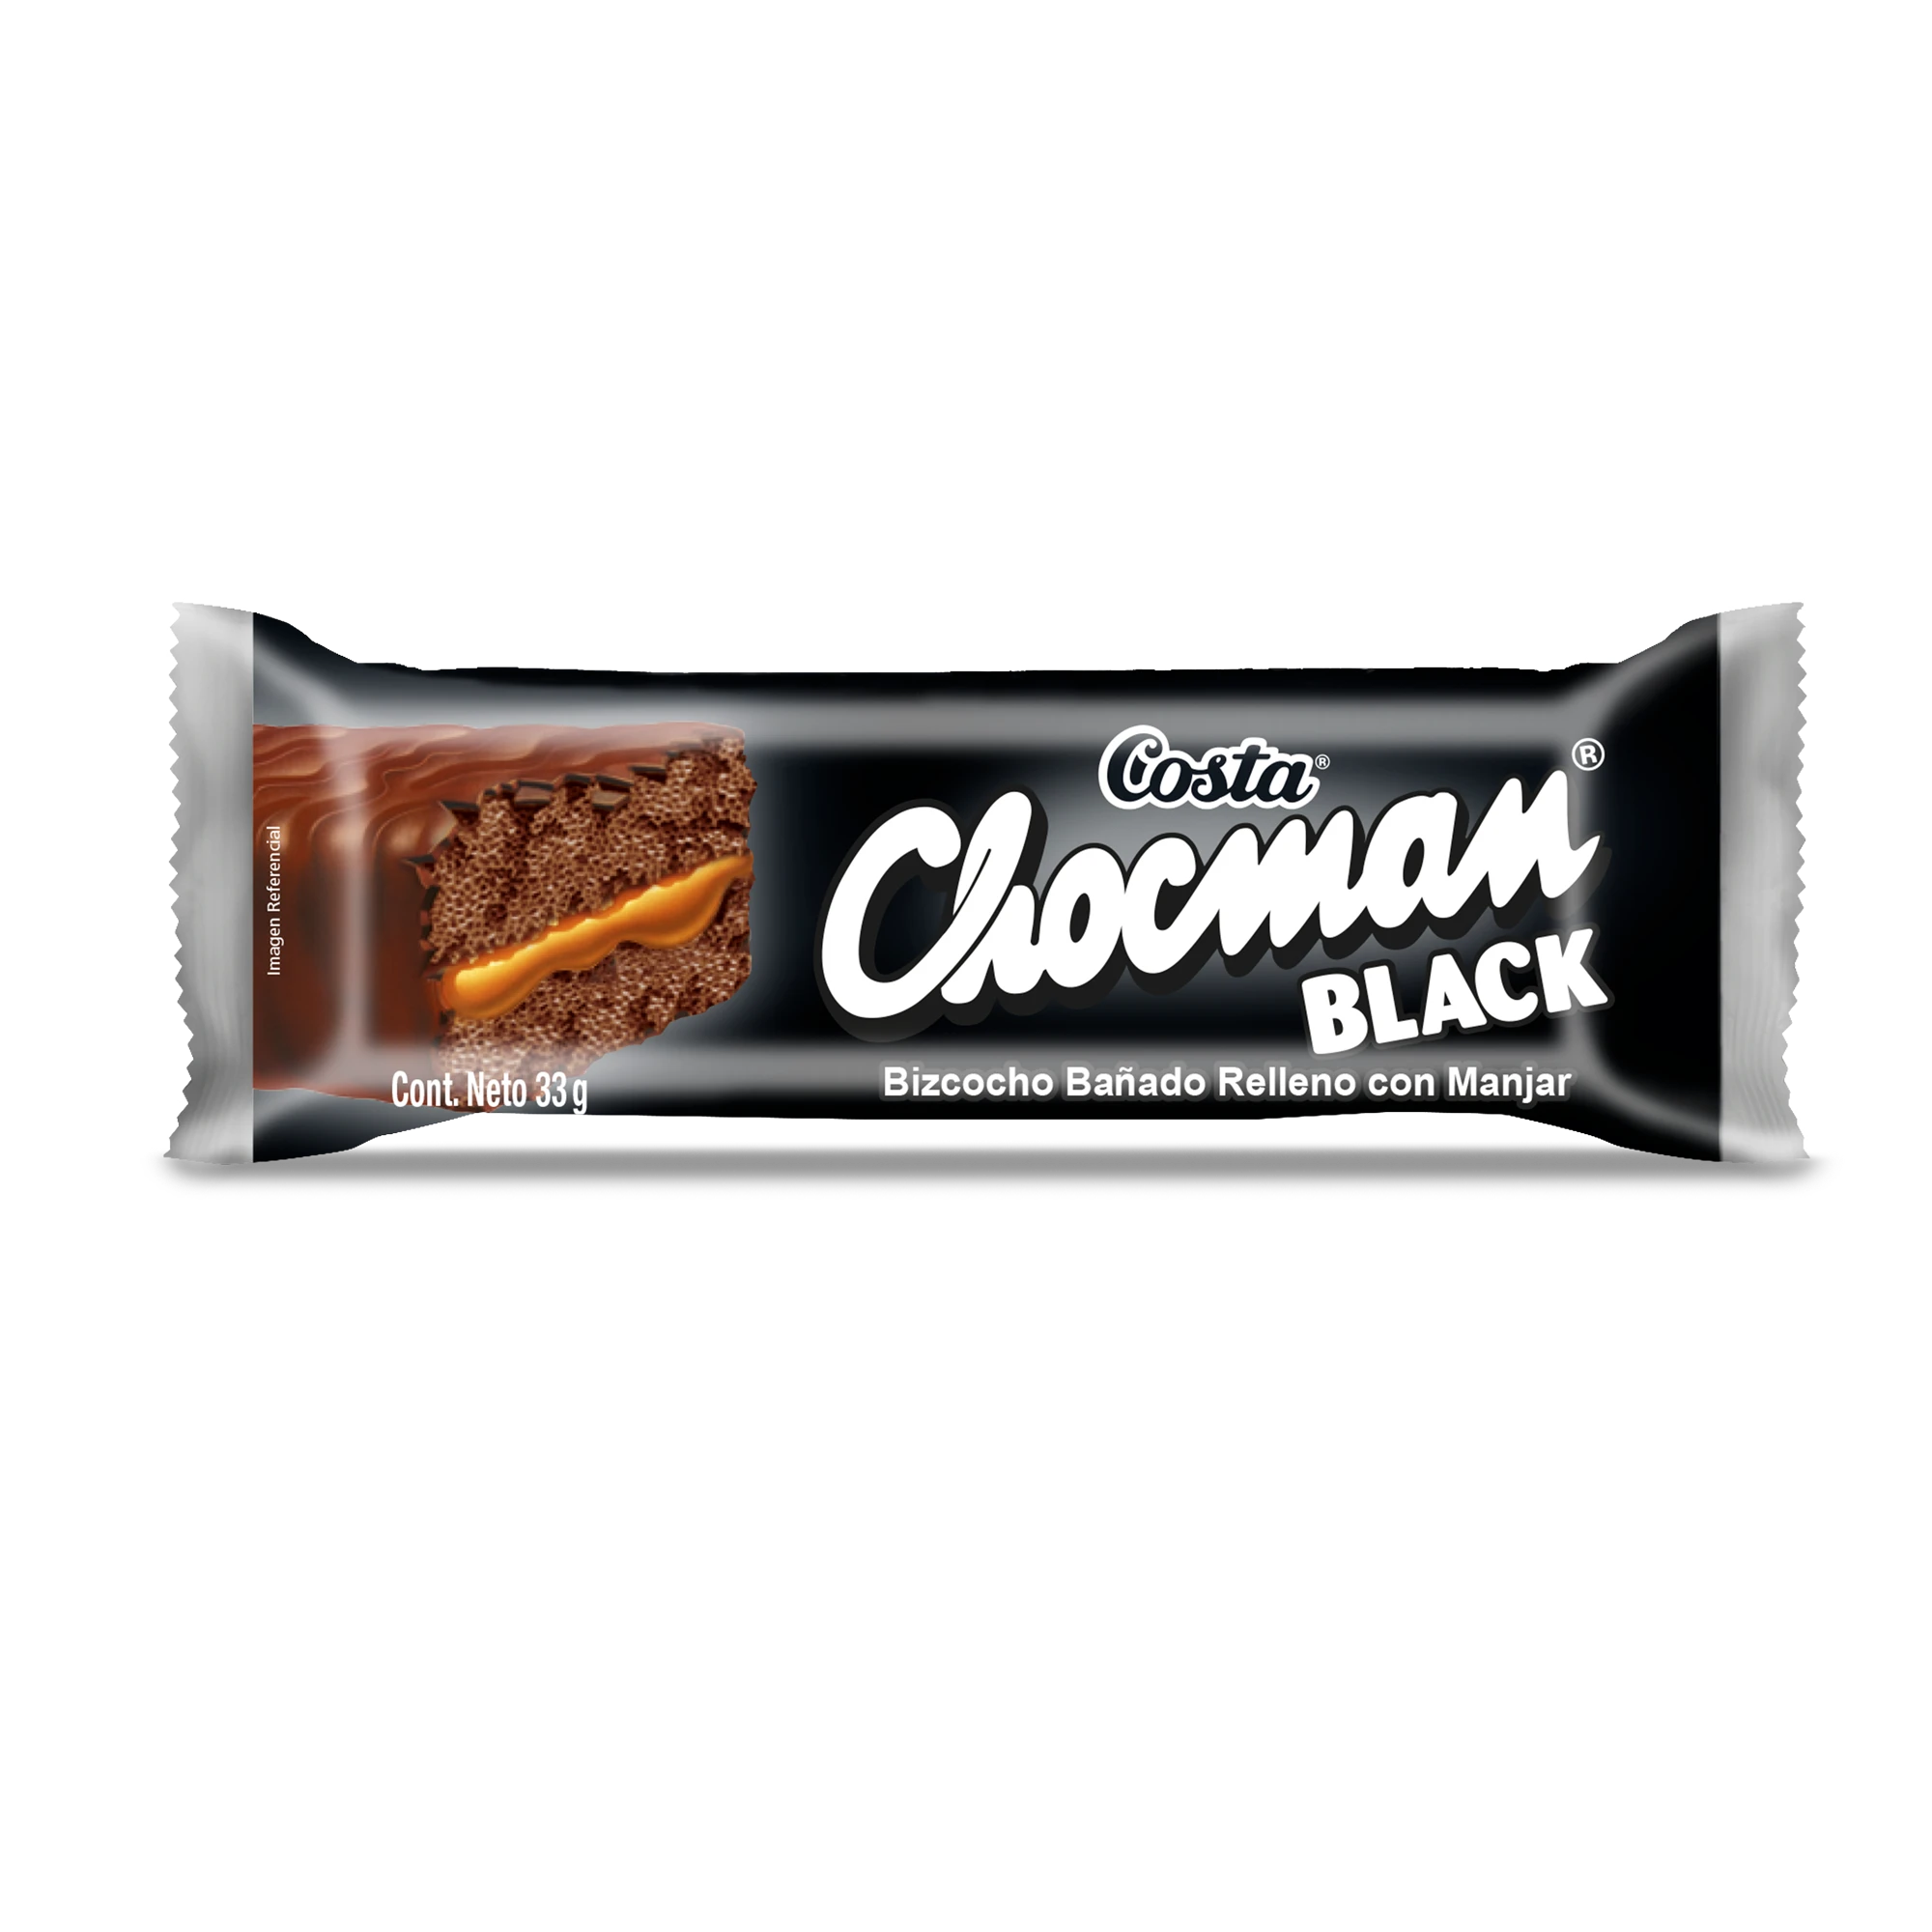 Chocman Black Individual